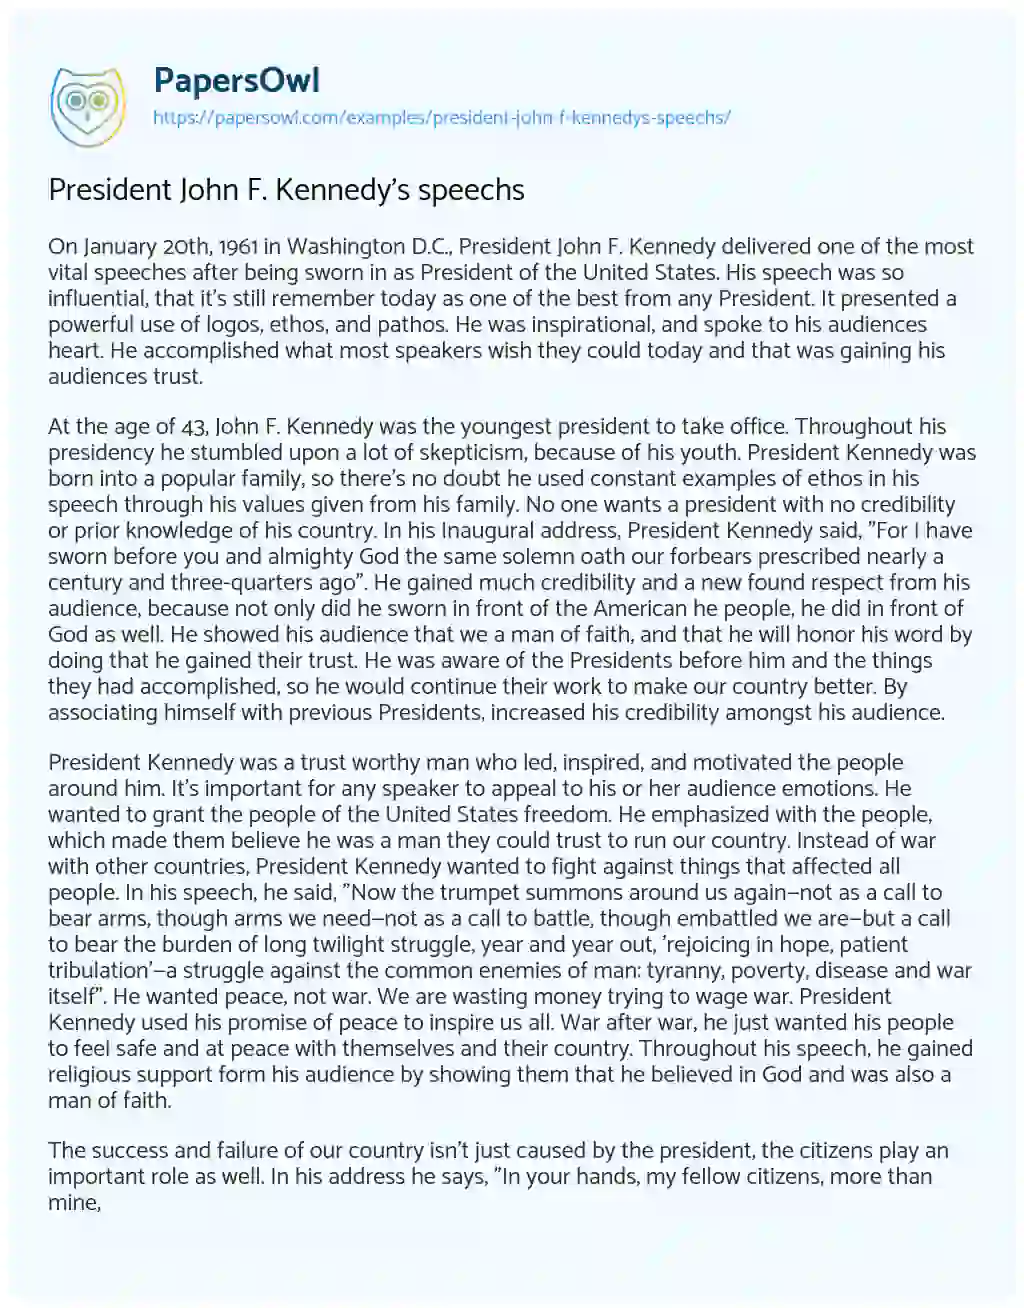 Essay on President John F. Kennedy’s Speechs